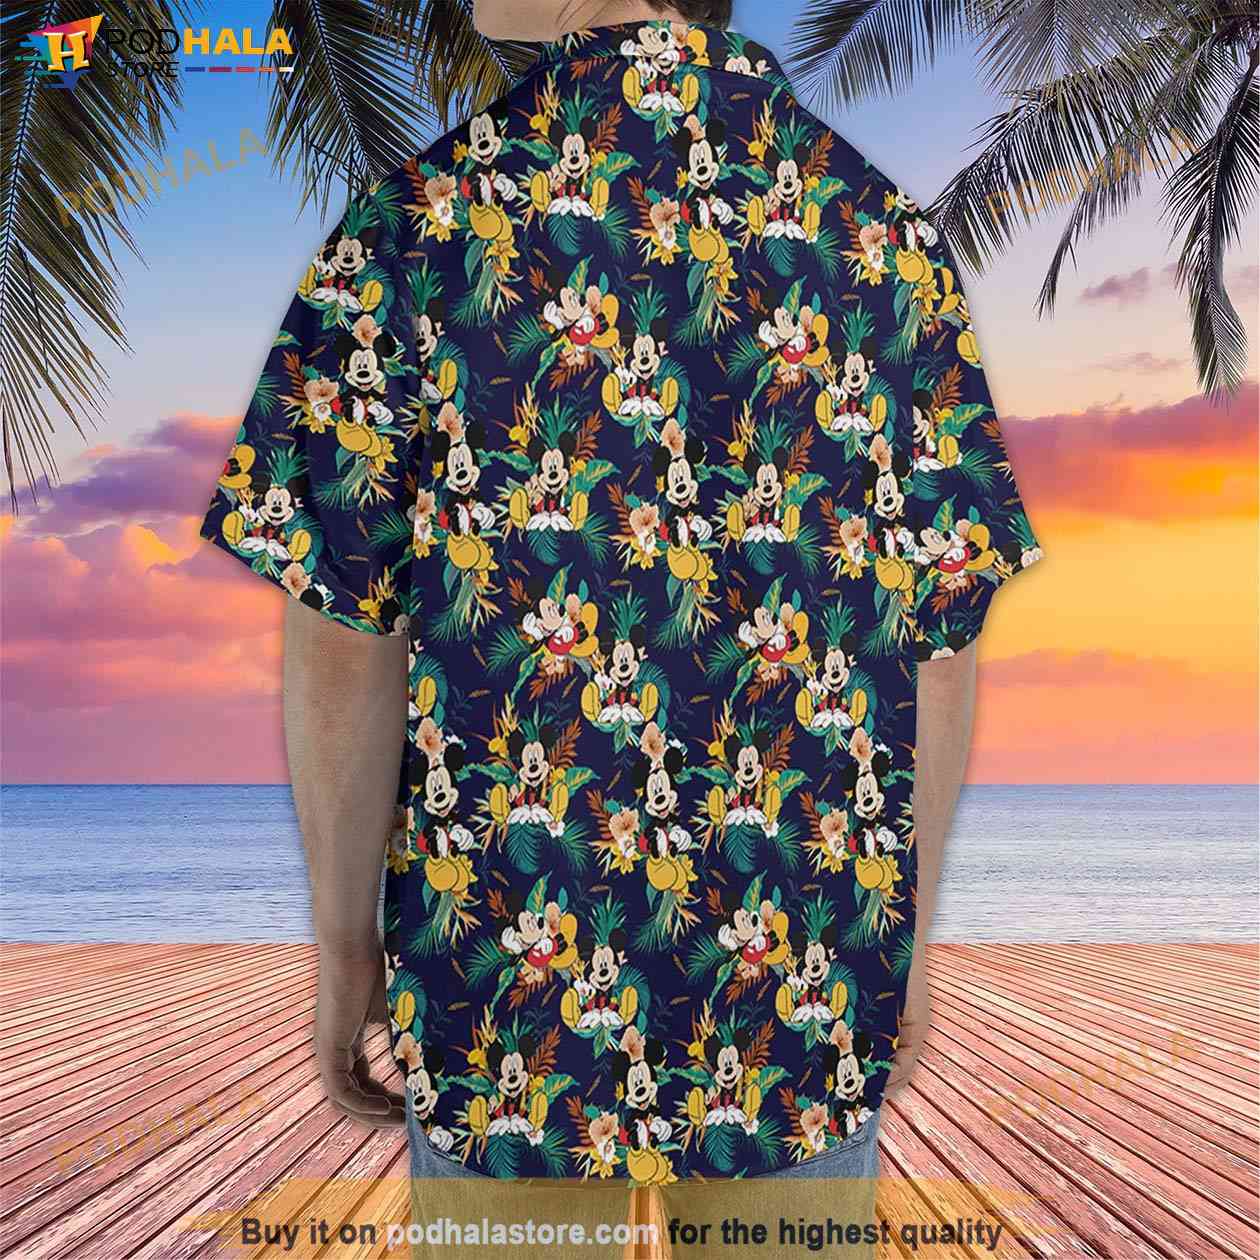 New York Yankees Tropical Floral Custom Name Aloha Hawaiian Shirt